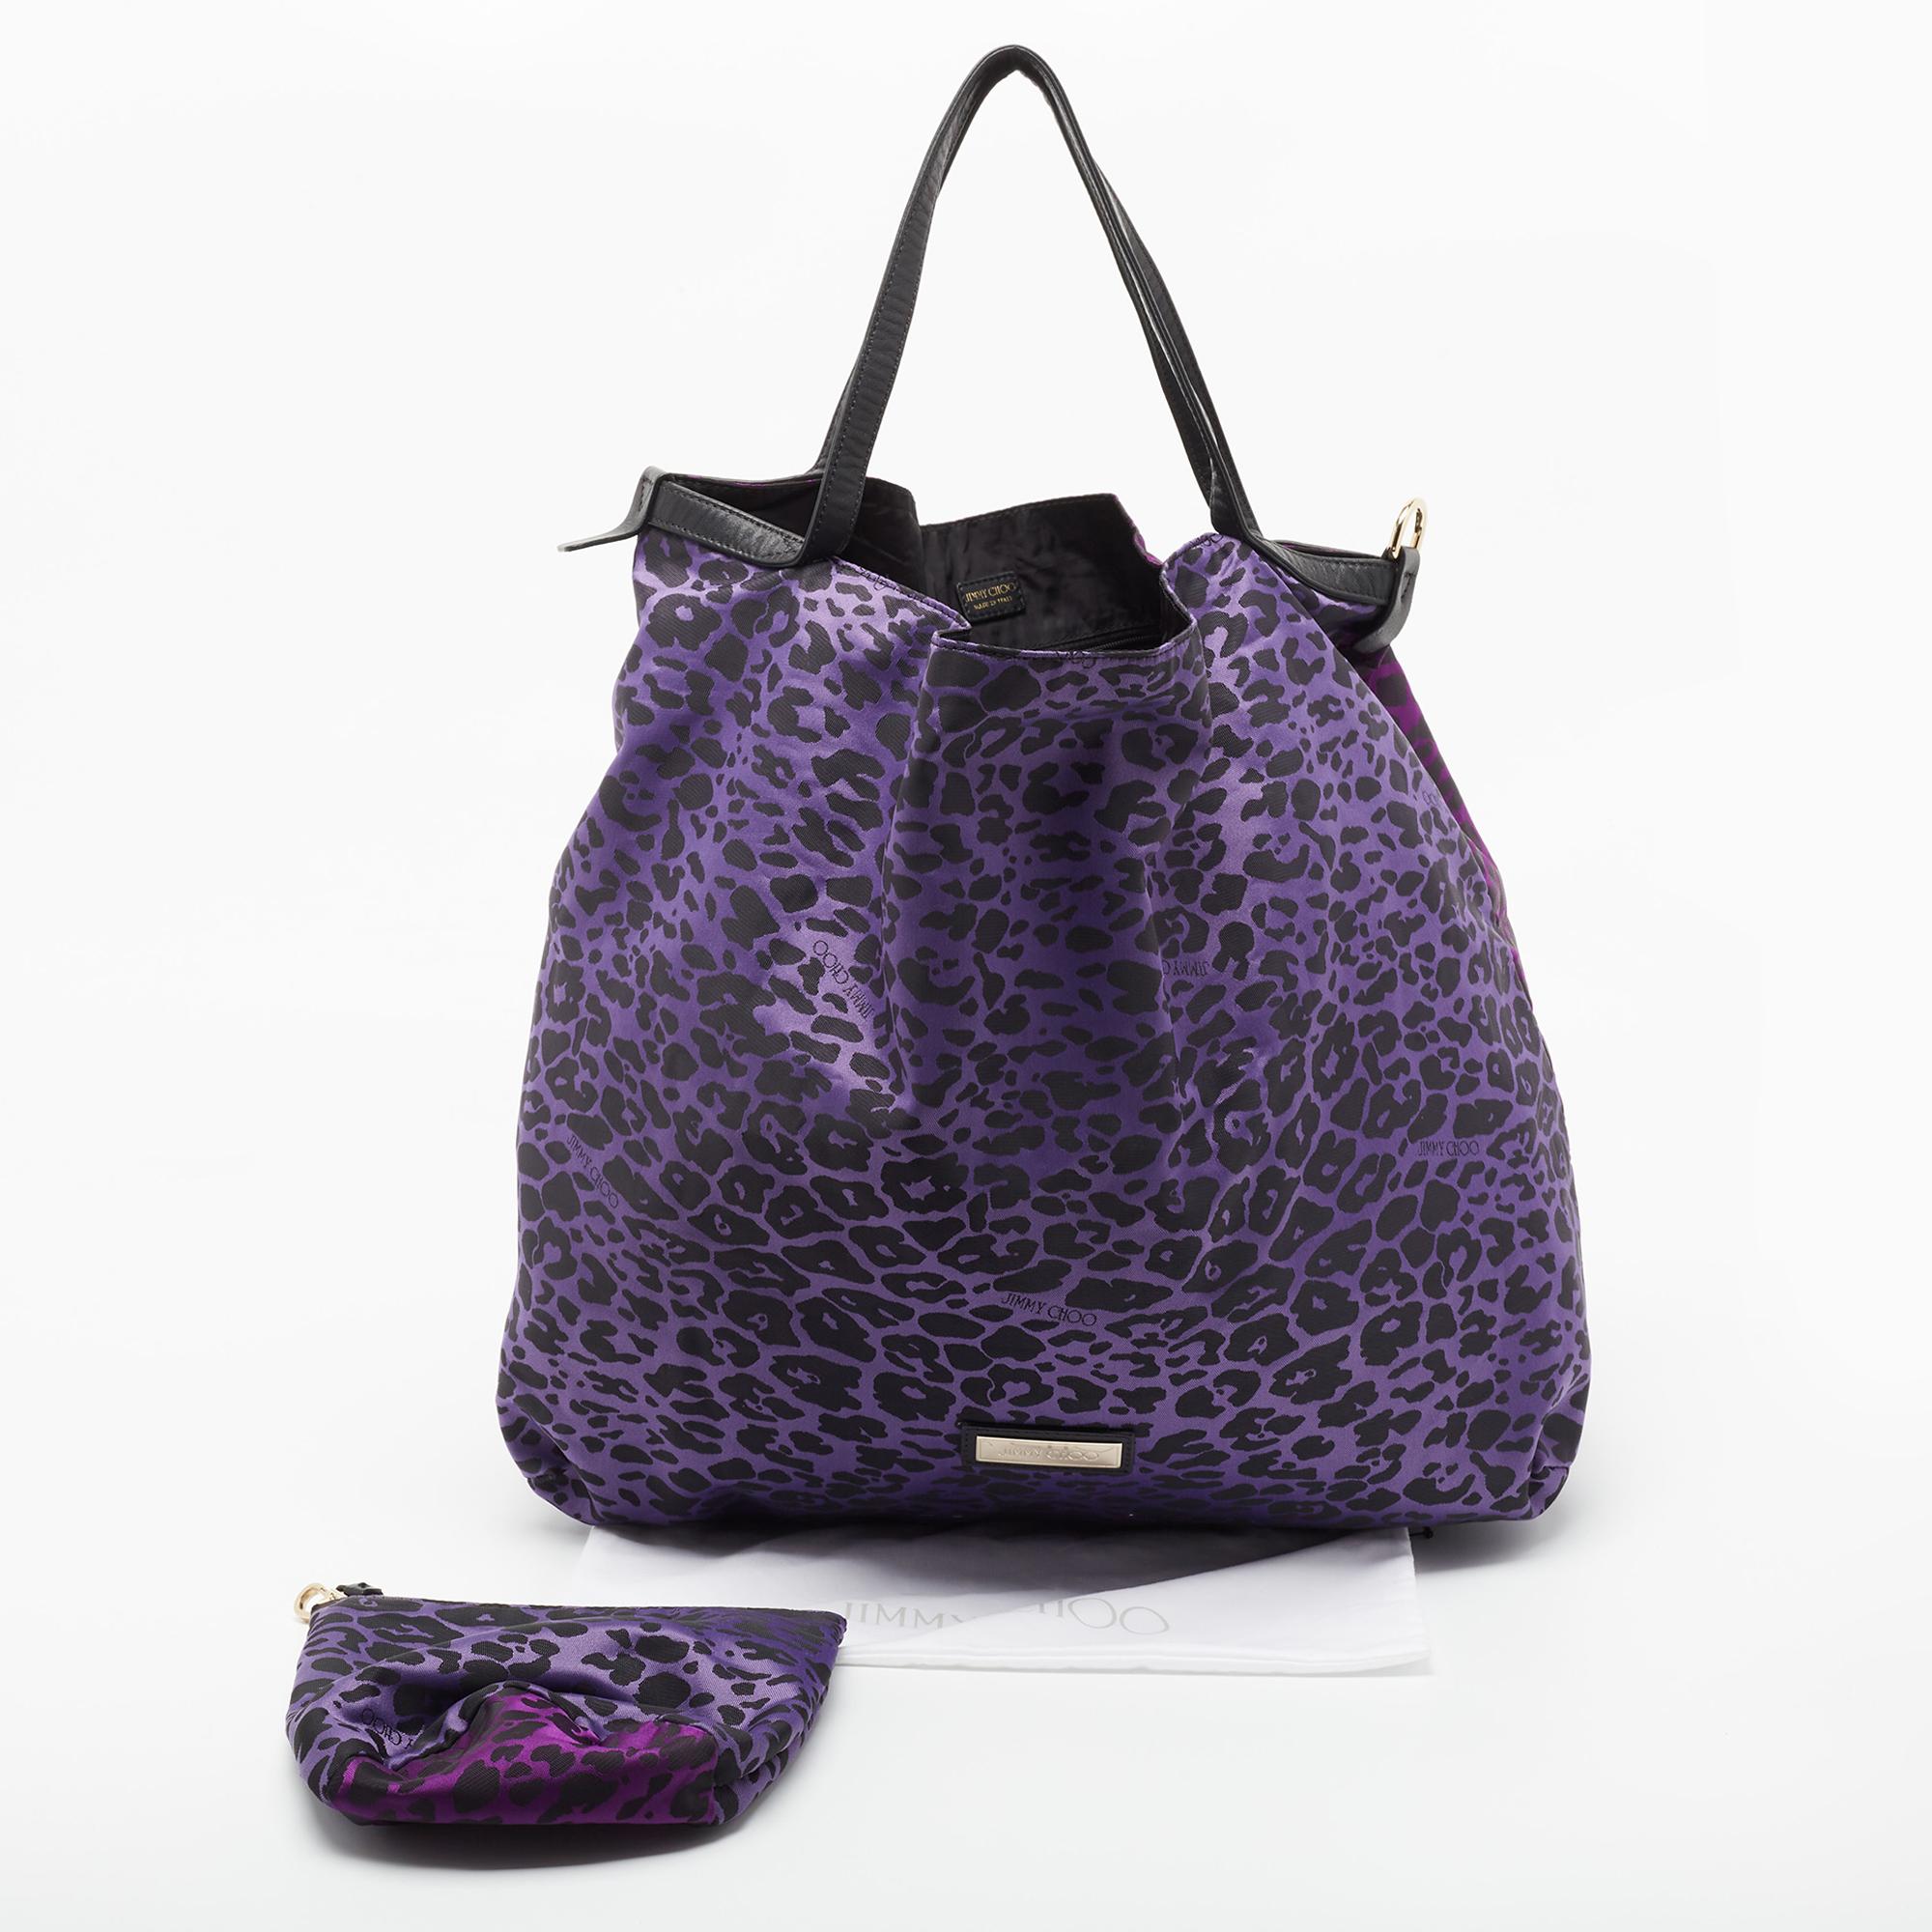 Jimmy Choo Purple/Black Leopard Print Fabric Zip Shopper Tote For Sale 9